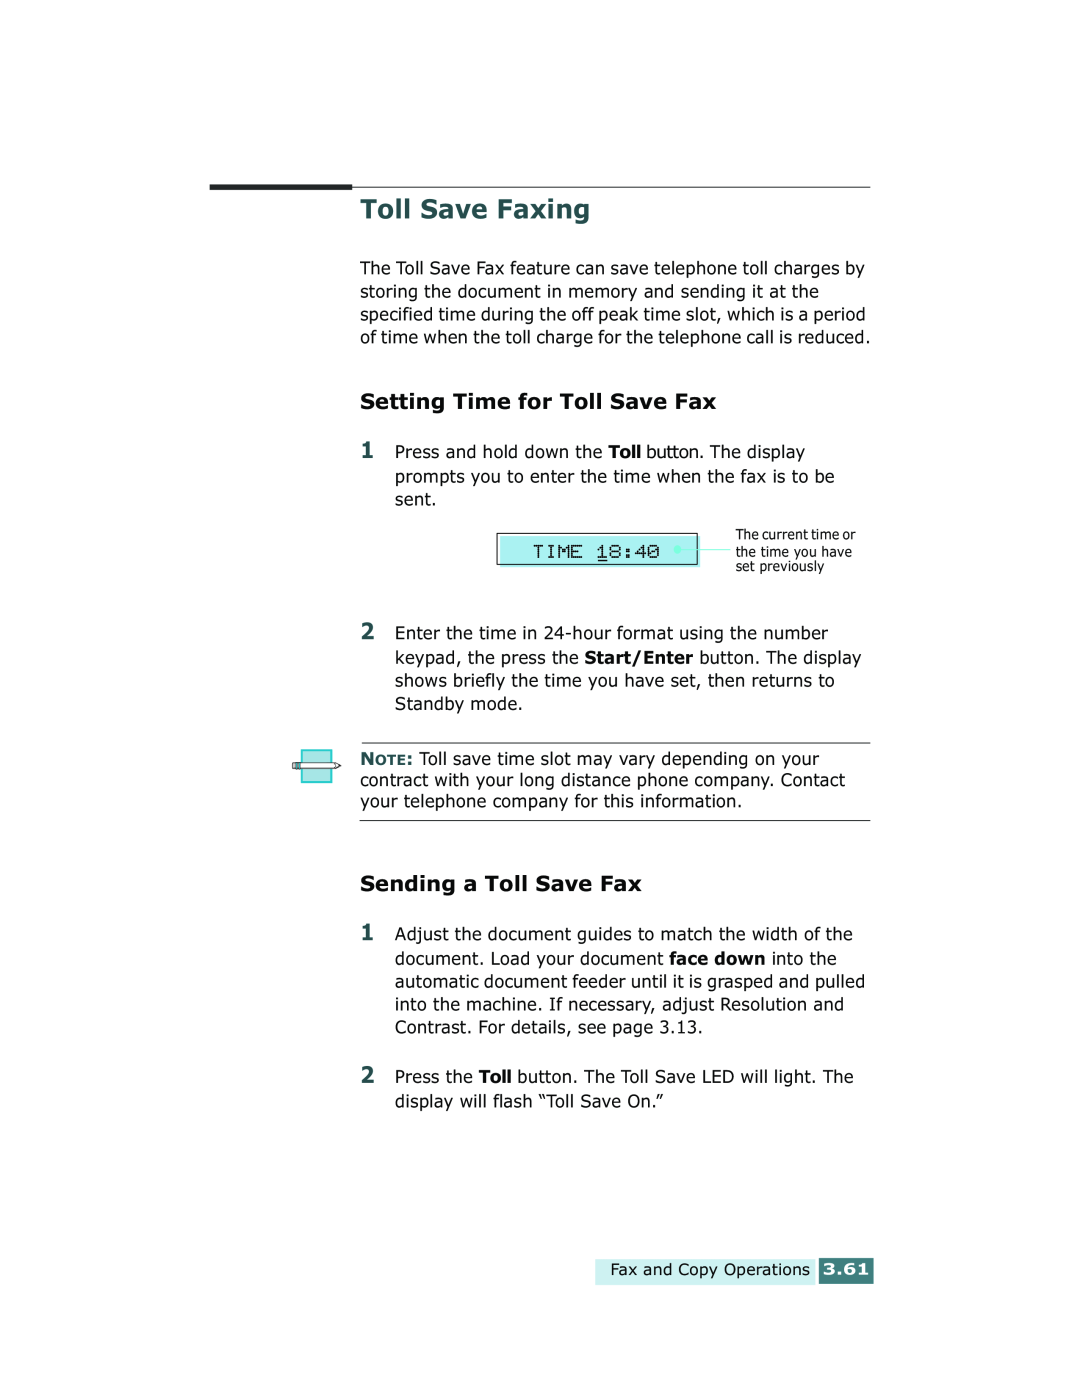 Xerox Pro 580 manual Toll Save Faxing, Setting Time for Toll Save Fax, Sending a Toll Save Fax 